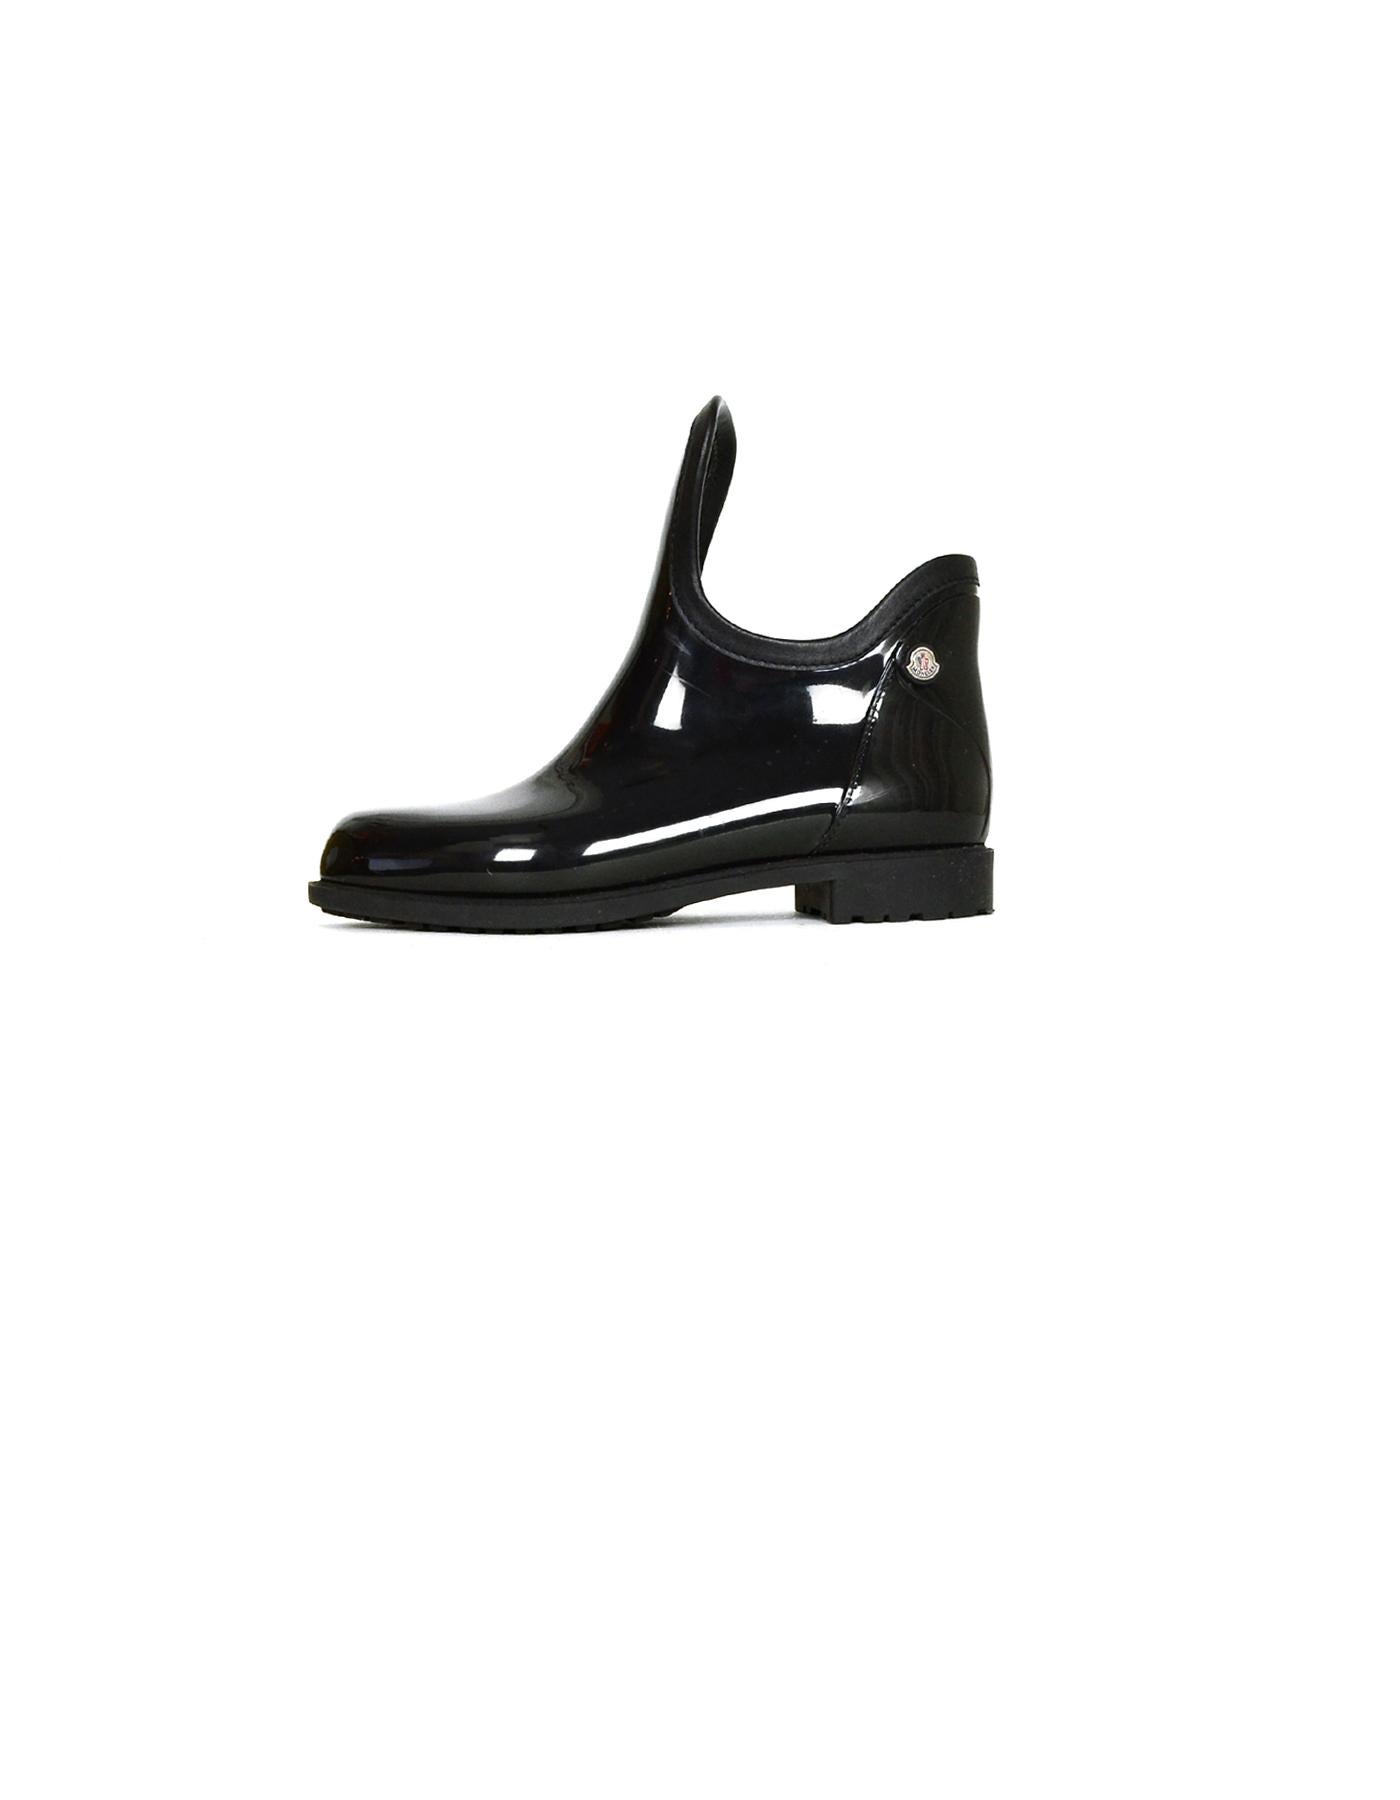 Moncler Black Rubber Rain Boots with Detachable Quilted Down sz 36 7